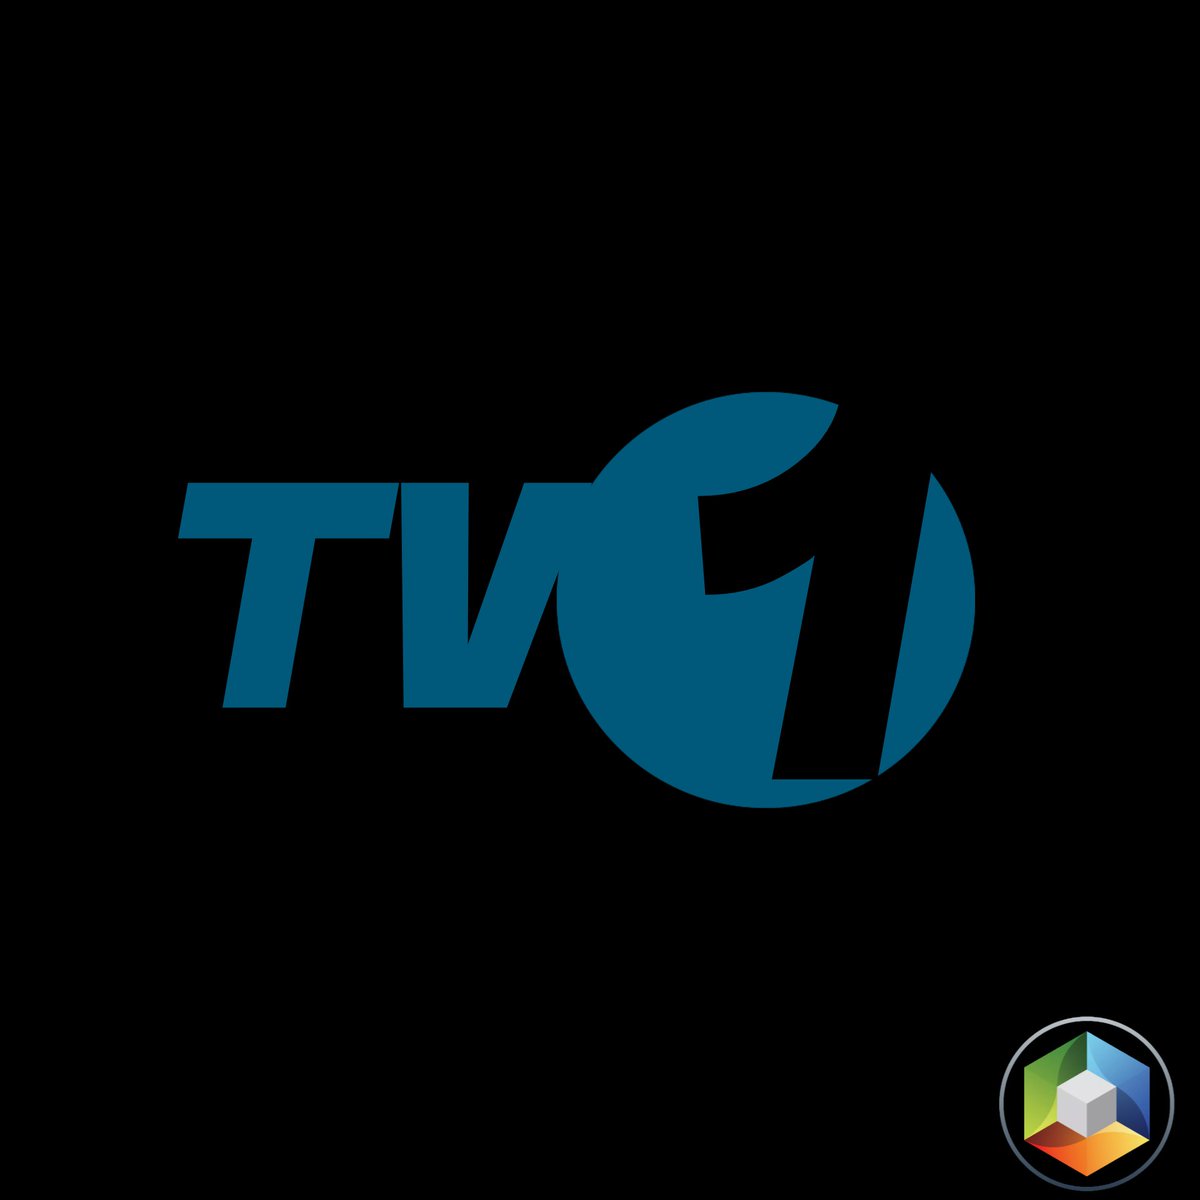 TV1 Design Art.

#logo #logos #logodesign #logomaker #DESIGNART #design #designinspiration #Font #Designship2024 #designthinking #design #designjobs #DesignGrowth #designtwitter #logodesigner